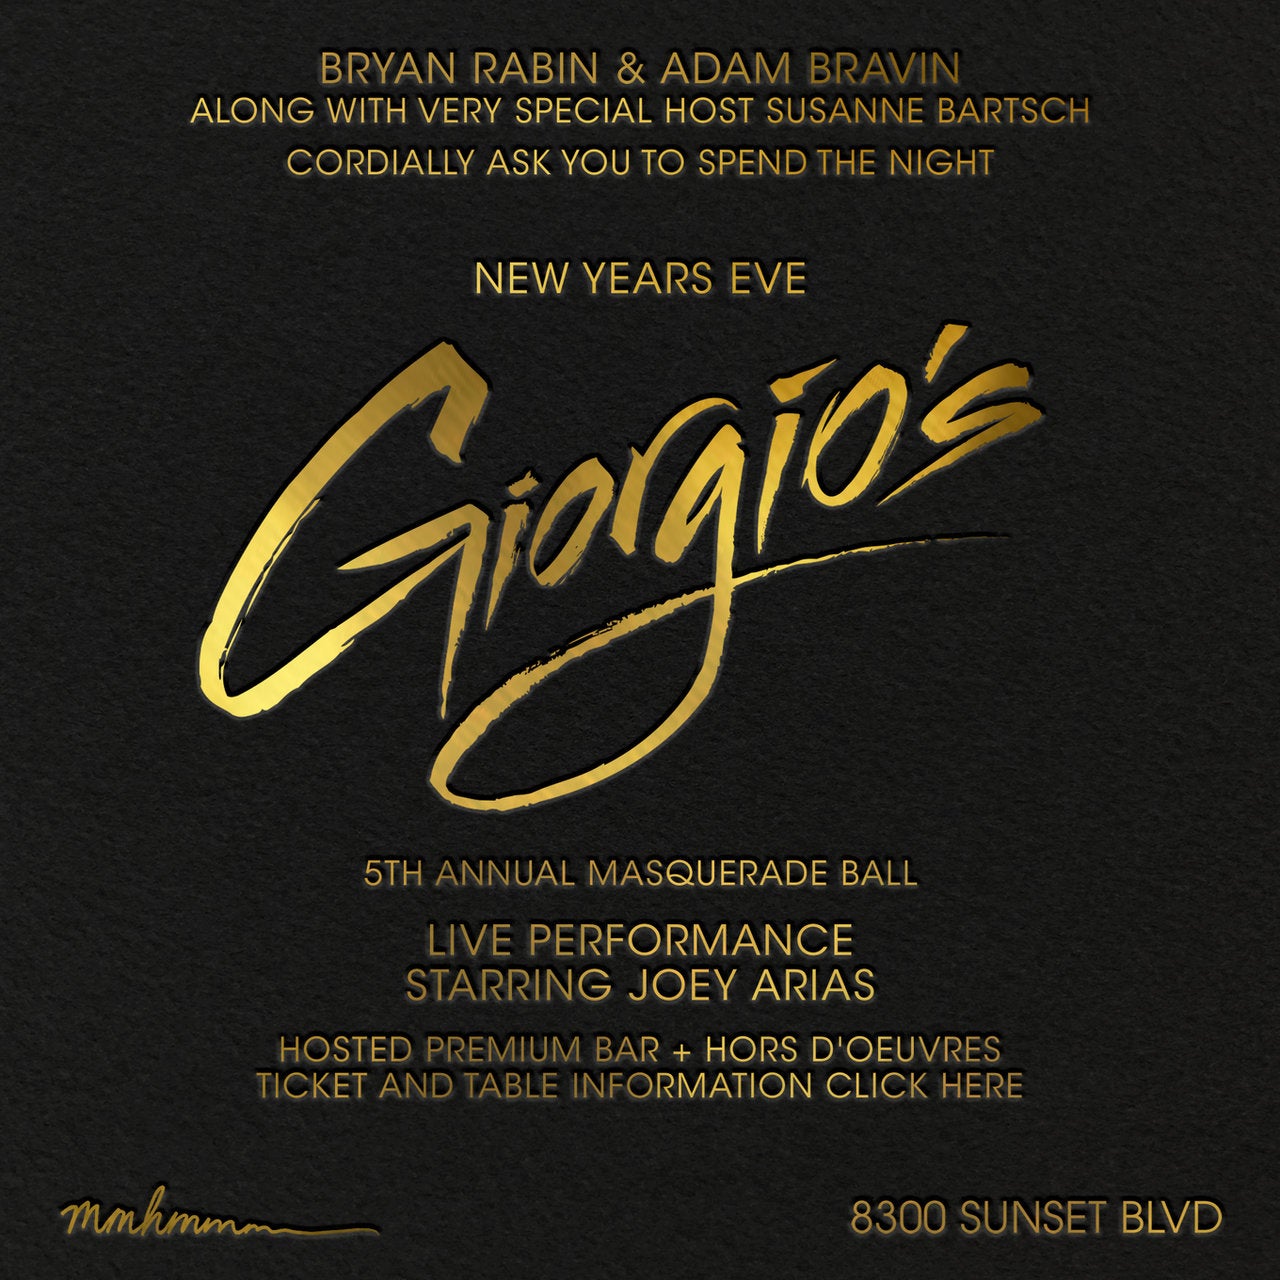 5th Annual Giorgio&#039;s NYE Masquerade Ball at The Standard, Hollywood